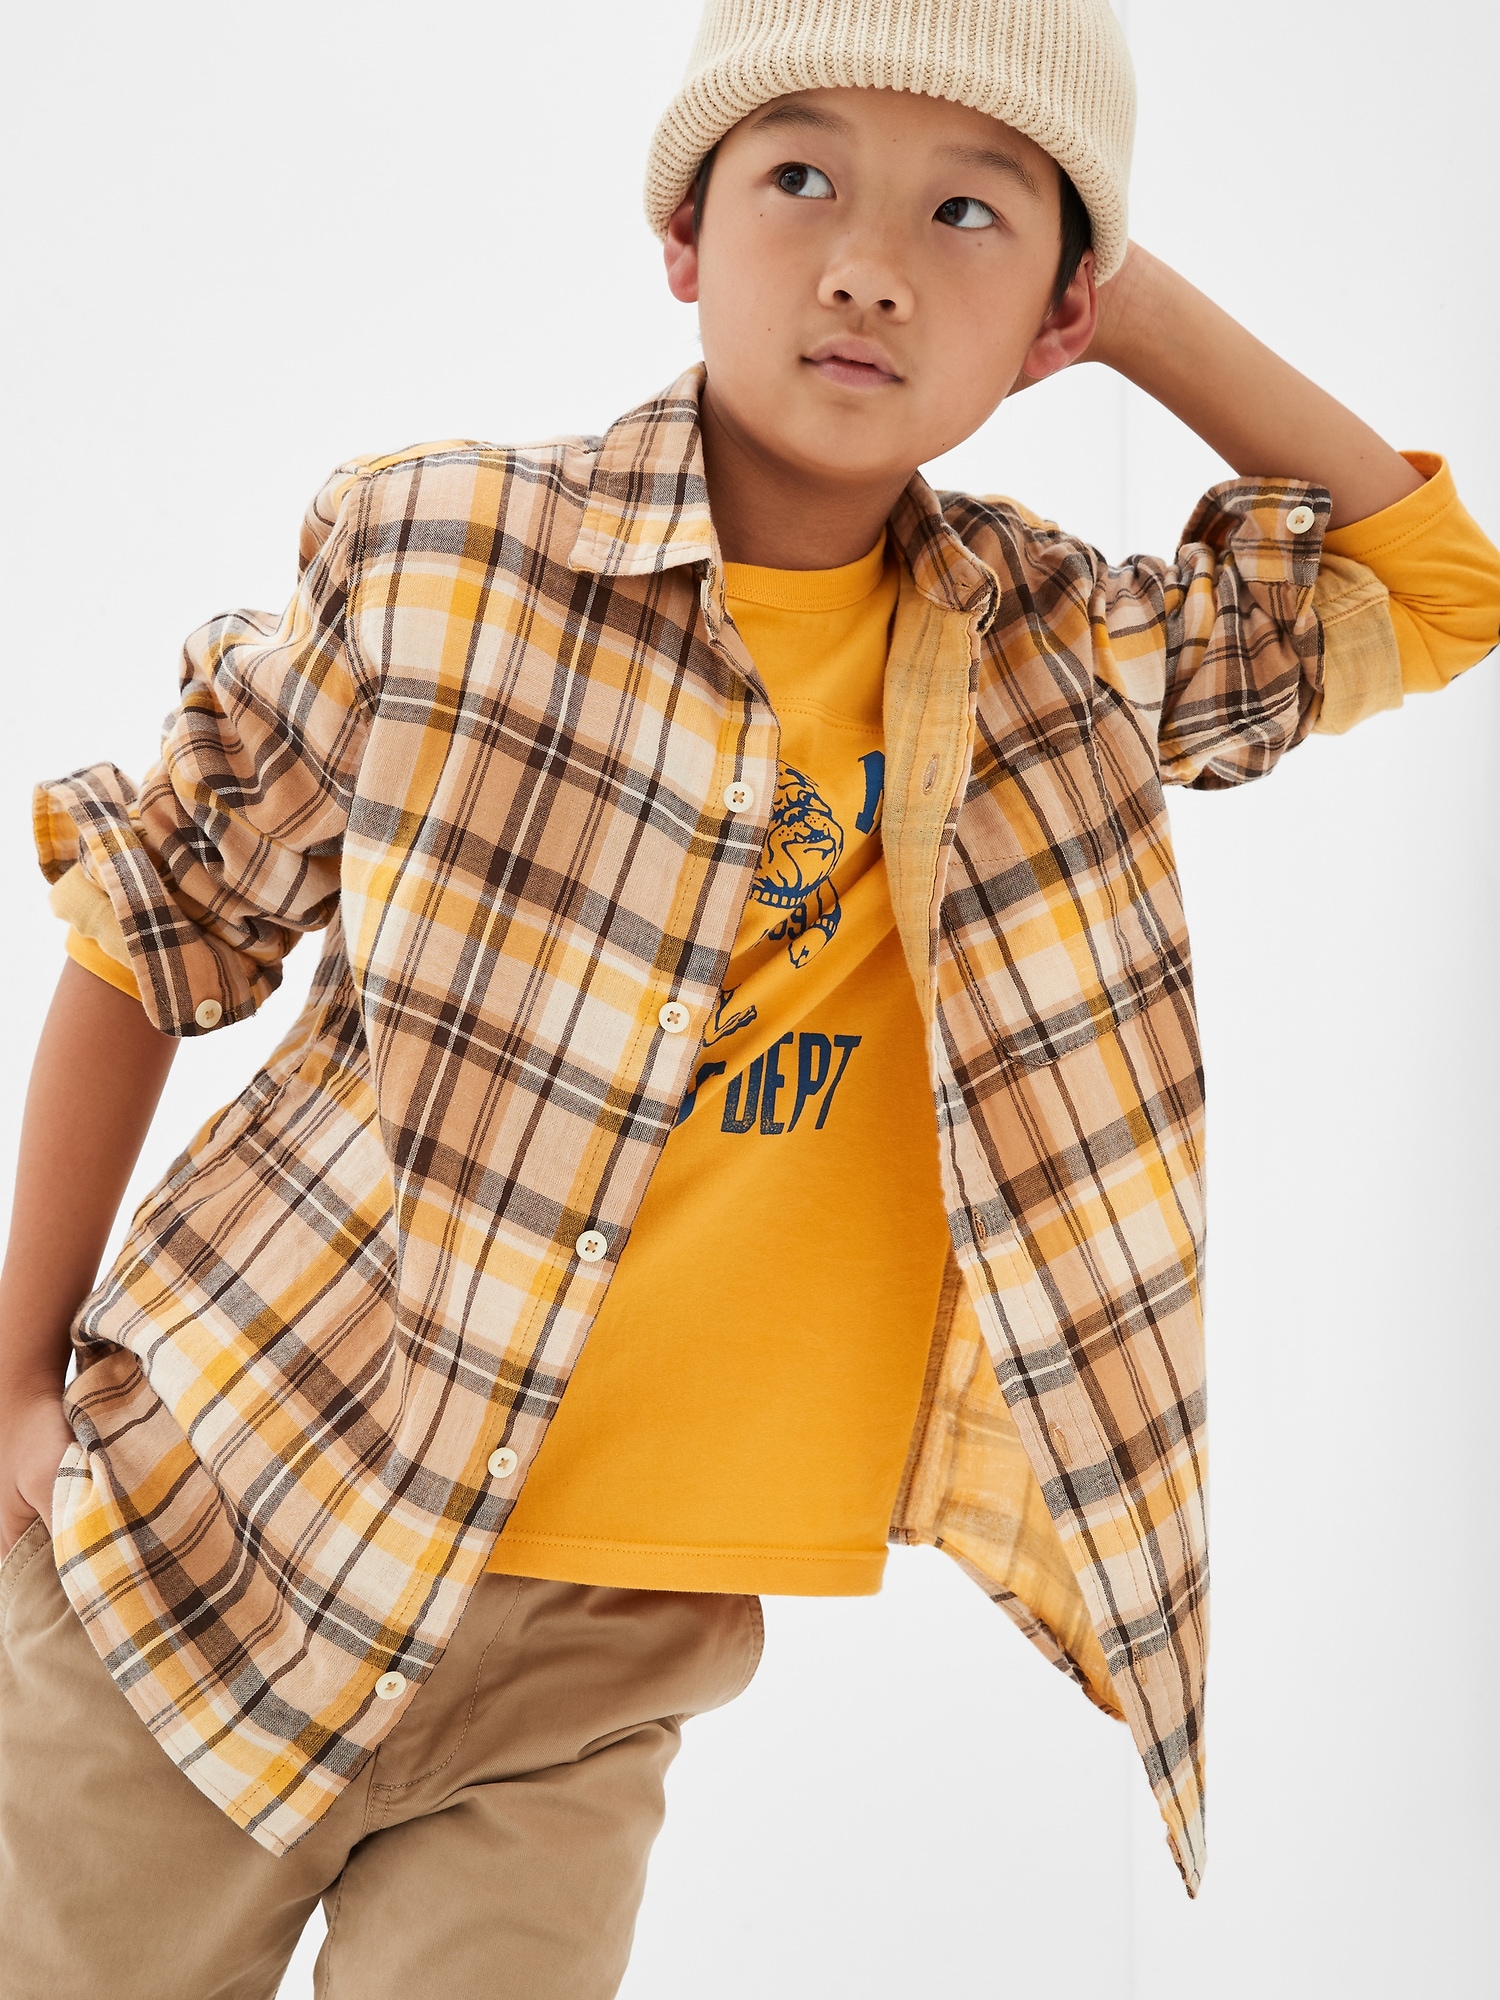 Kids Doubleweave Plaid Shirt | Gap Factory